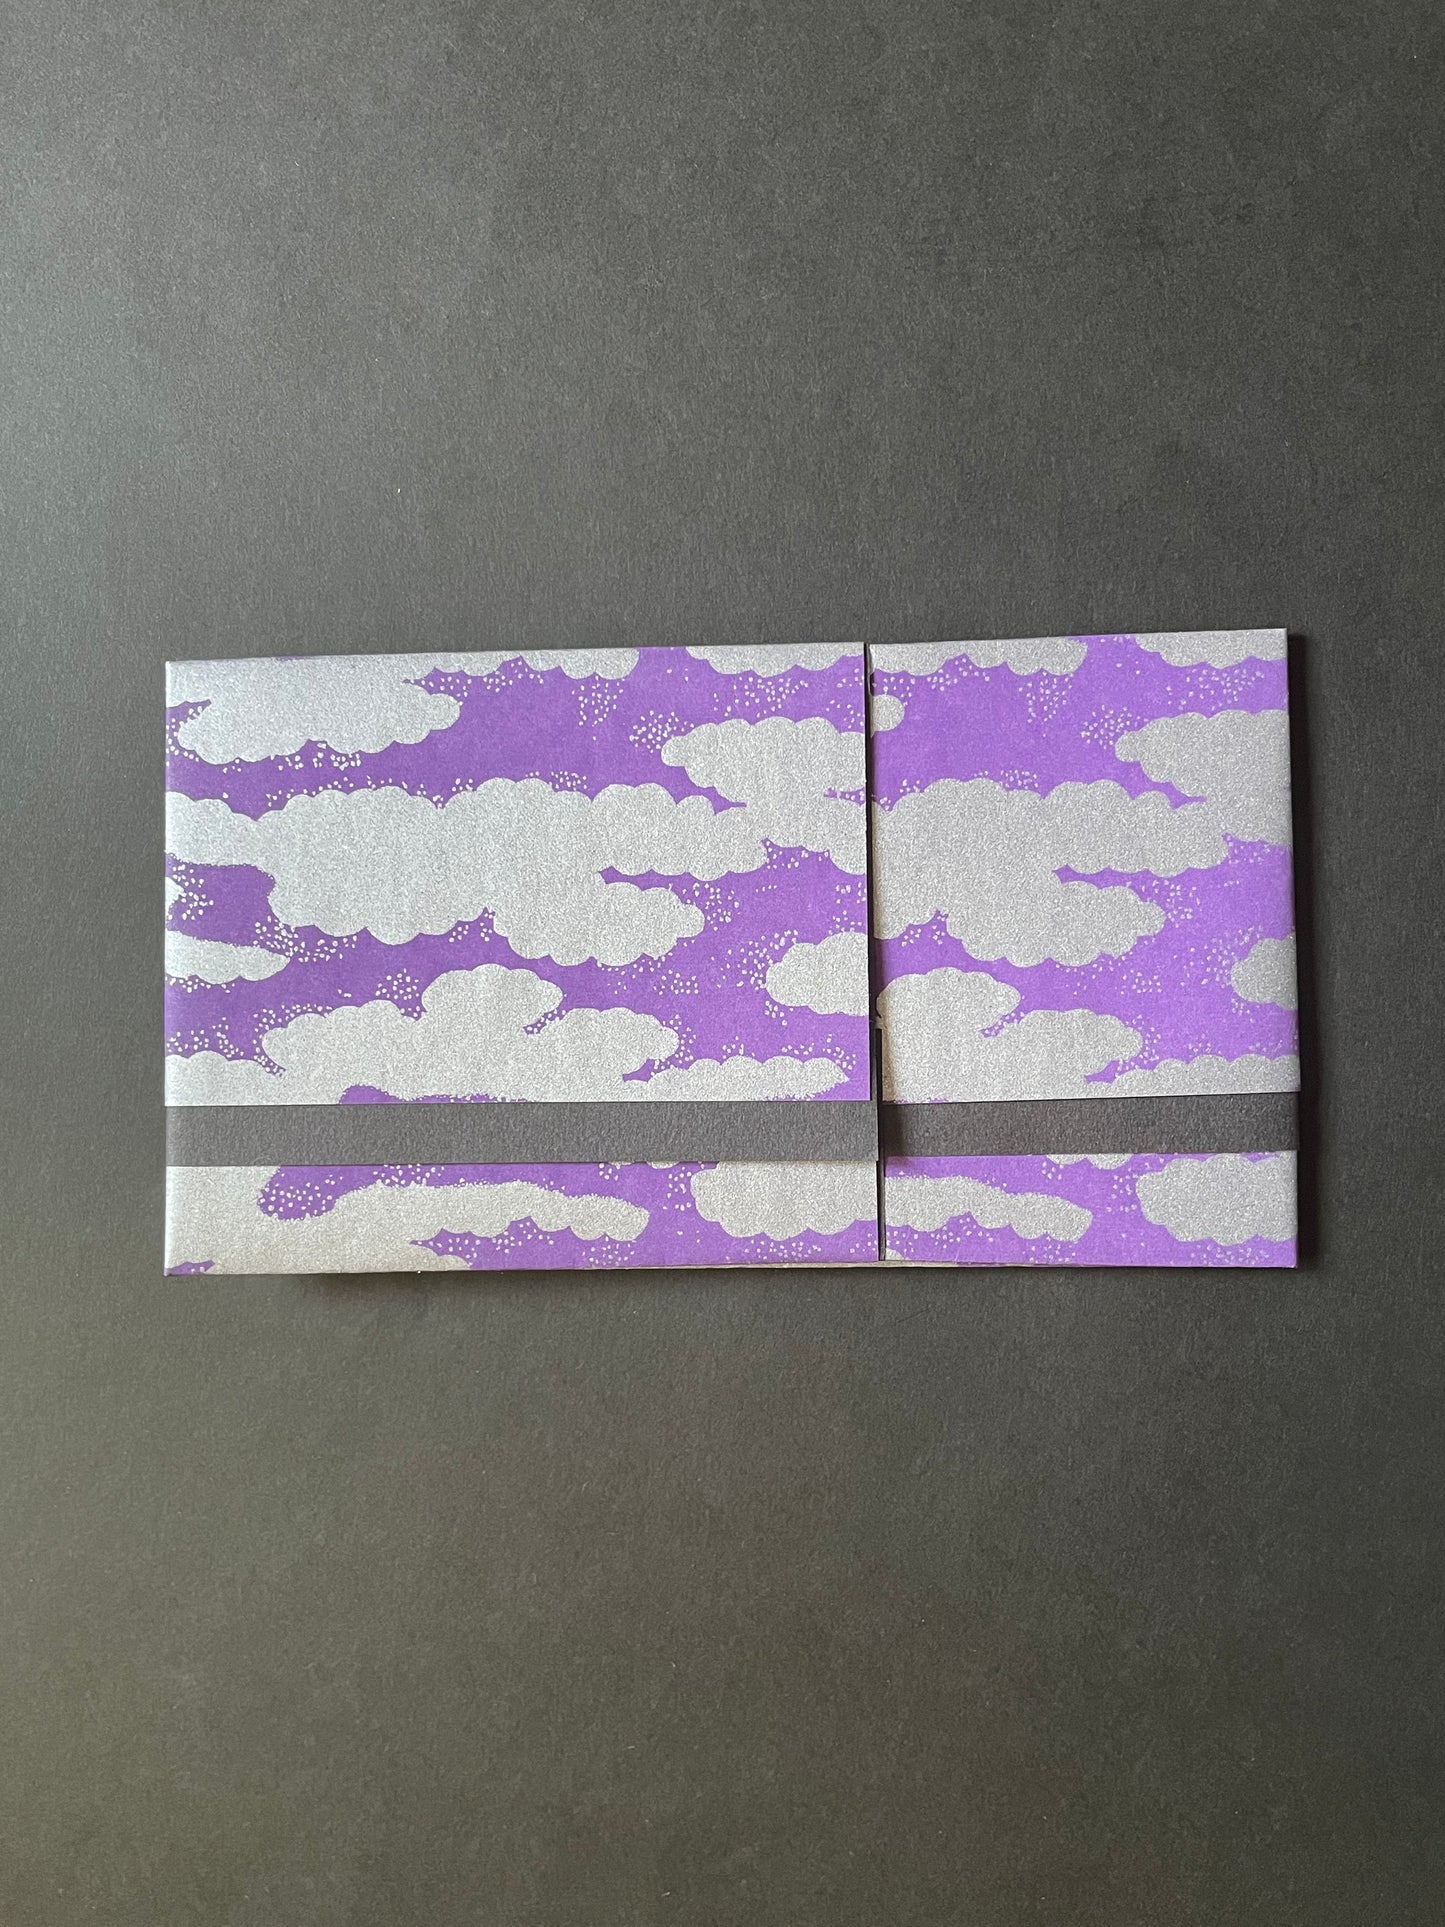 Okurifumi (10) clouds, purple, stripes